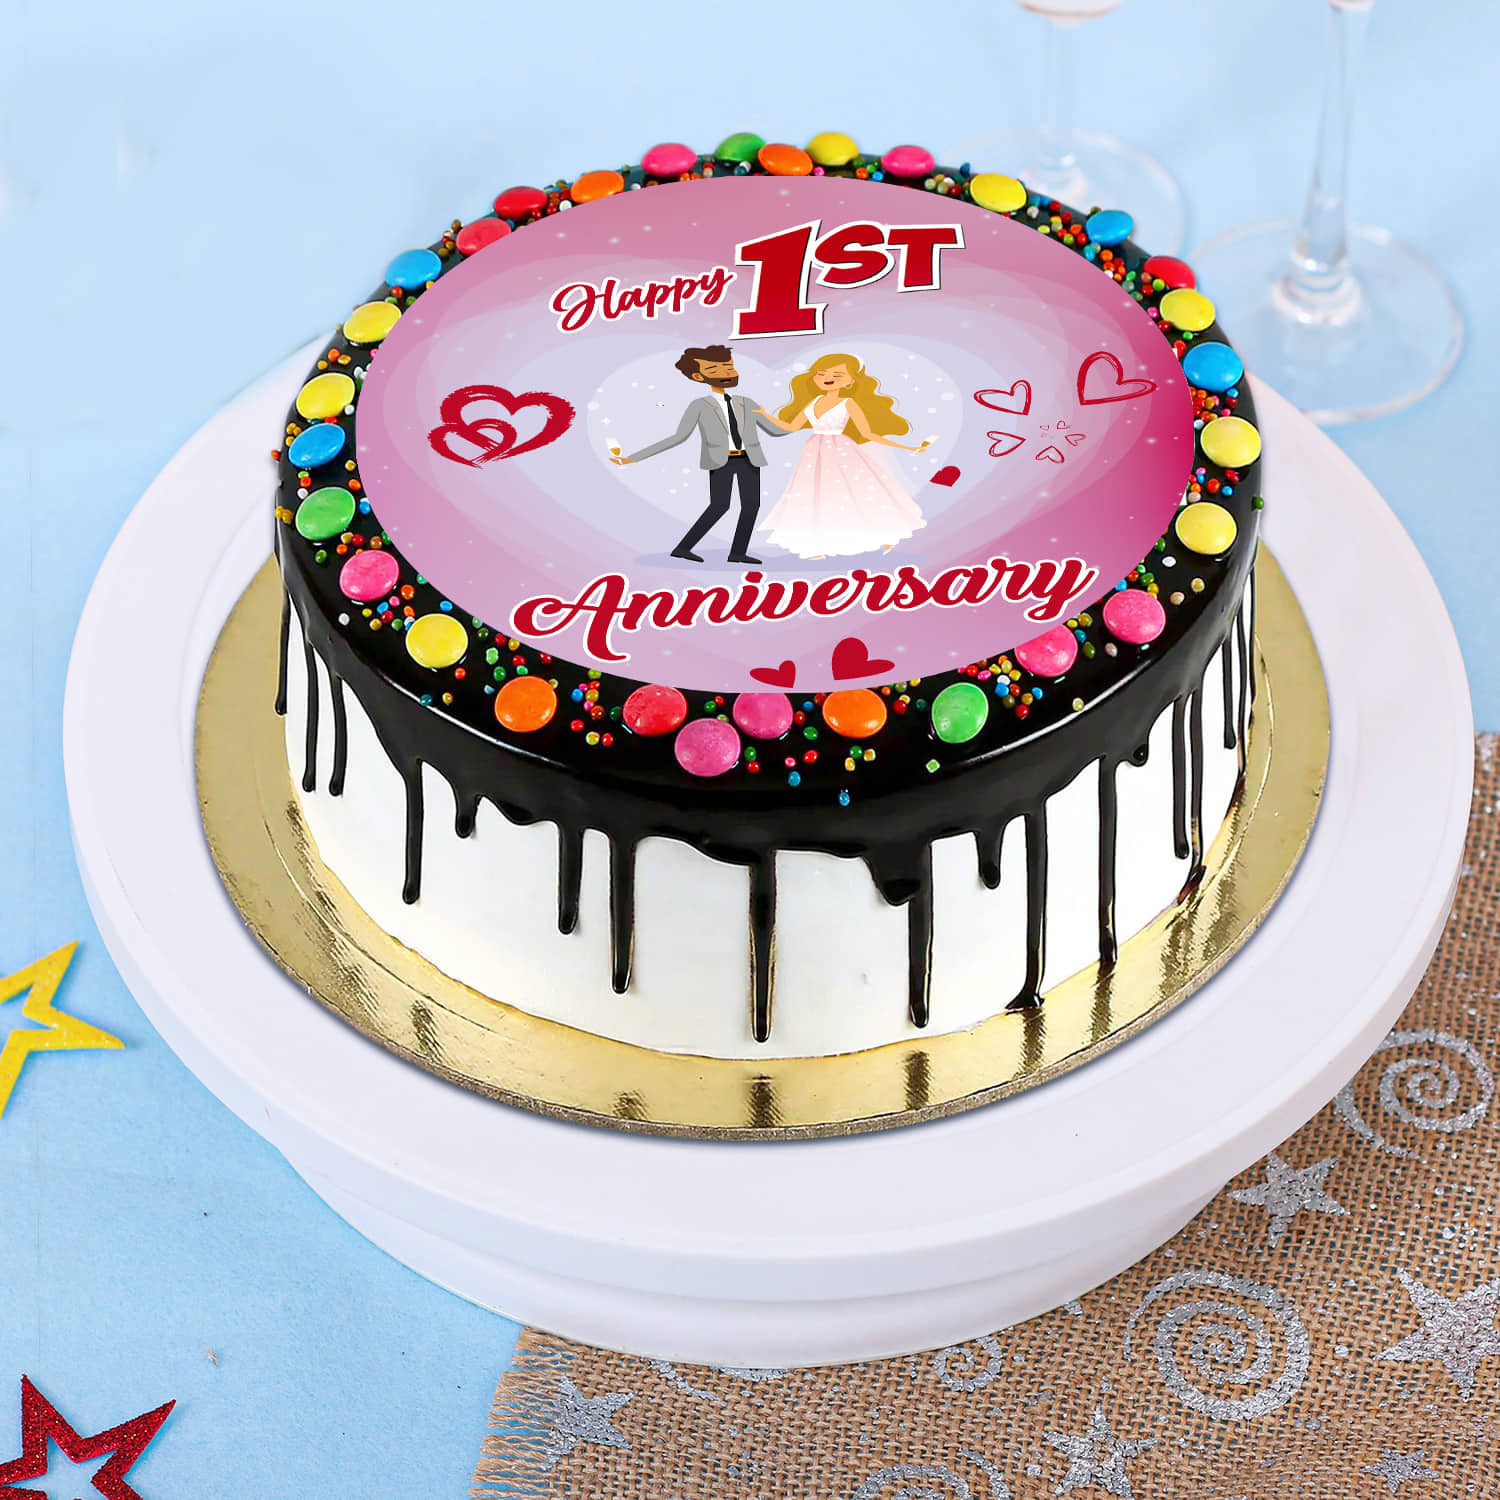 Wedding Anniversary - 11 years of Bliss - Decorated Cake - CakesDecor